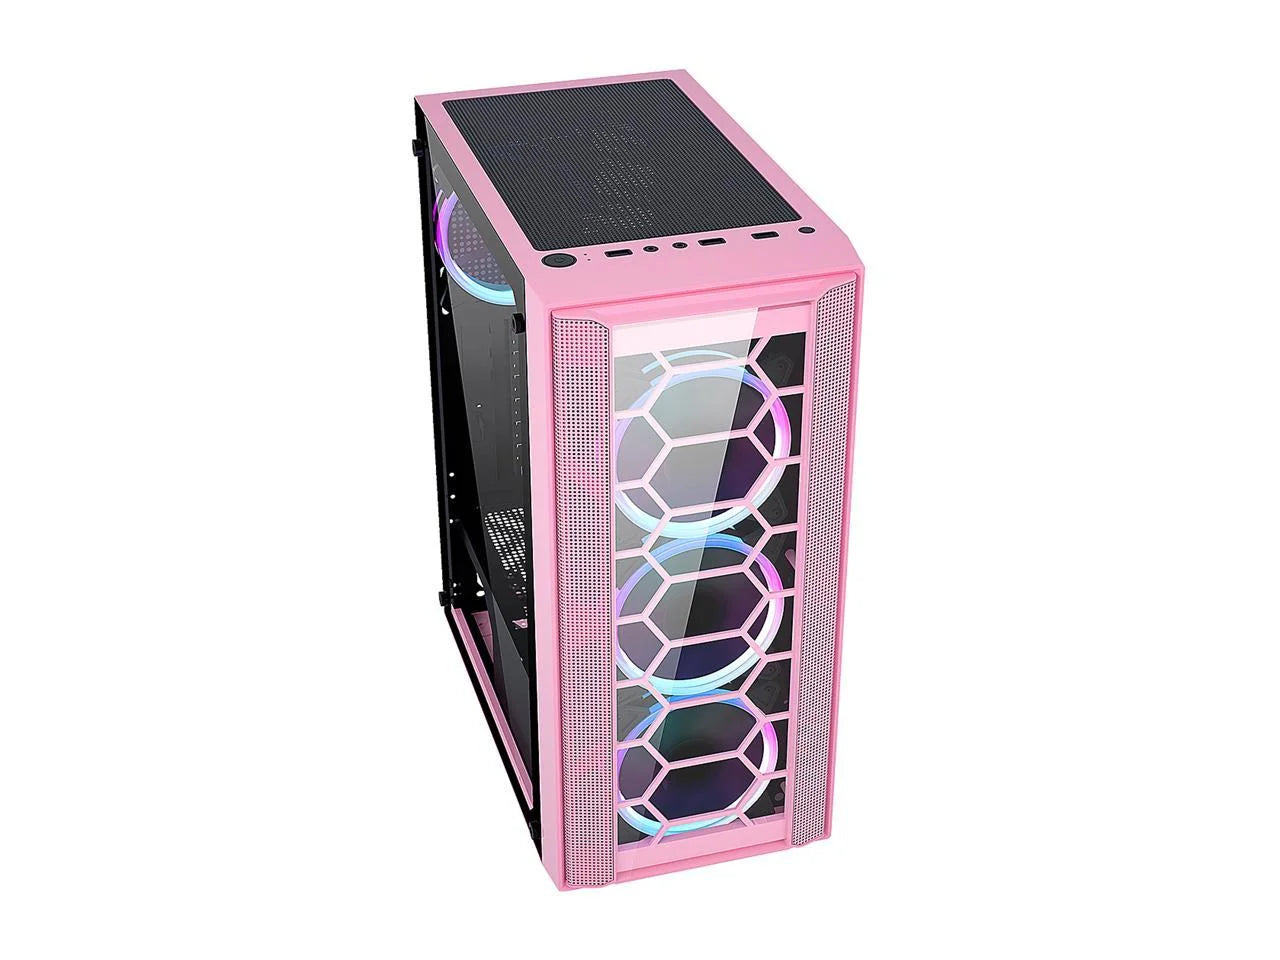 DIYPC Rainbow-Flash-F4-P Pink USB 3.0 Steel Tempered Glass ATX Mid Tower Pc Case 4 X 120Mm Autoflow Rainbow LED Fans 